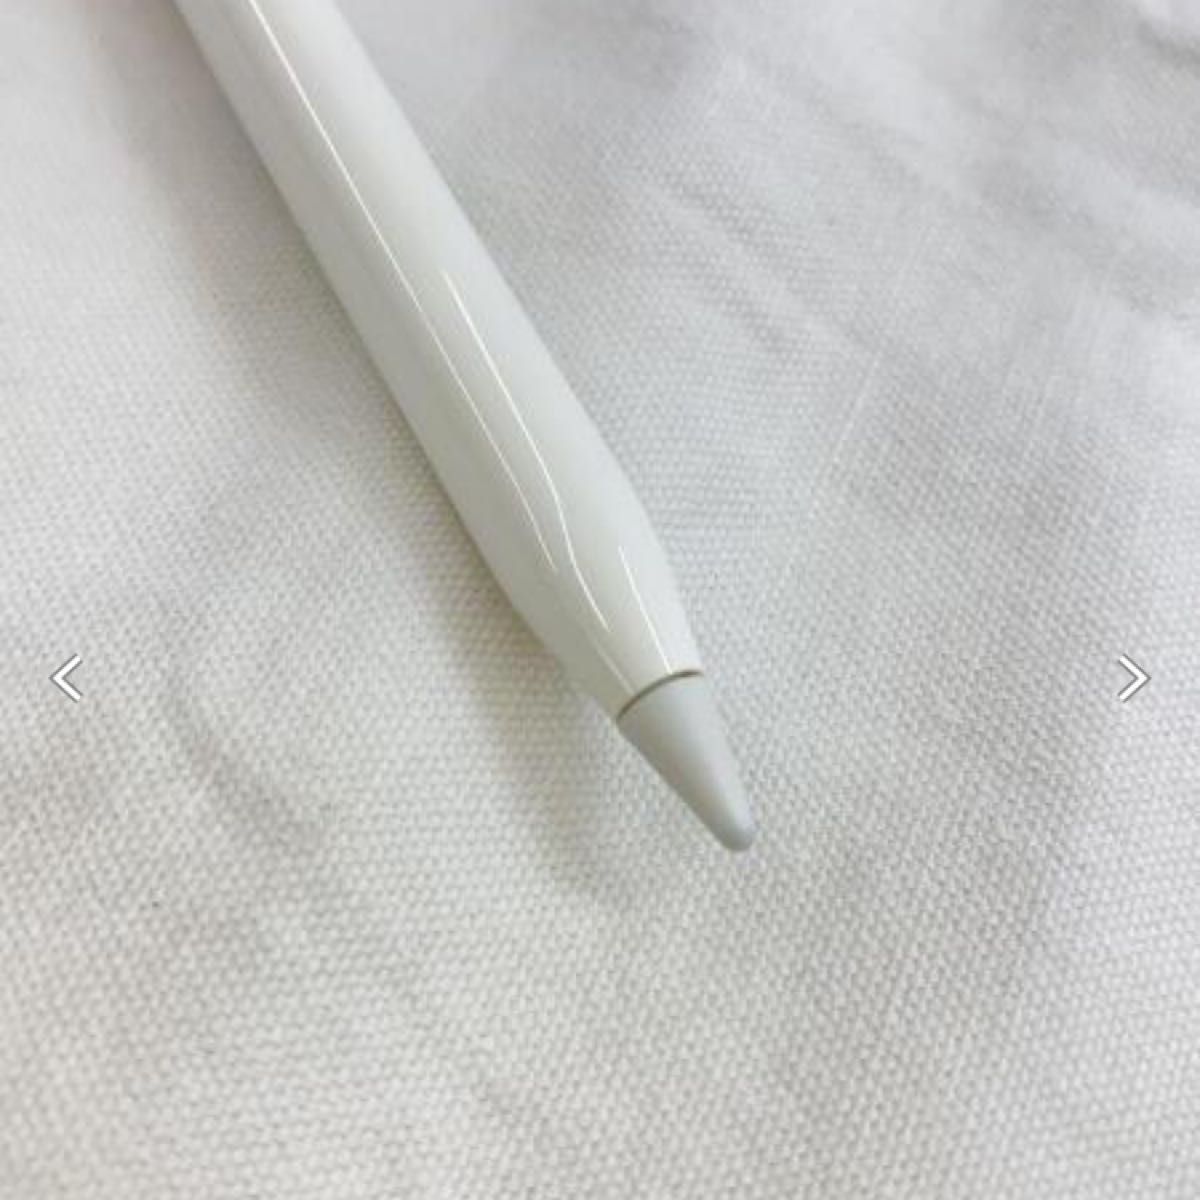 Apple Pencil MK0C2J/A A1603/付属品･箱有/2015年式 MK0C2J Pencil Apple